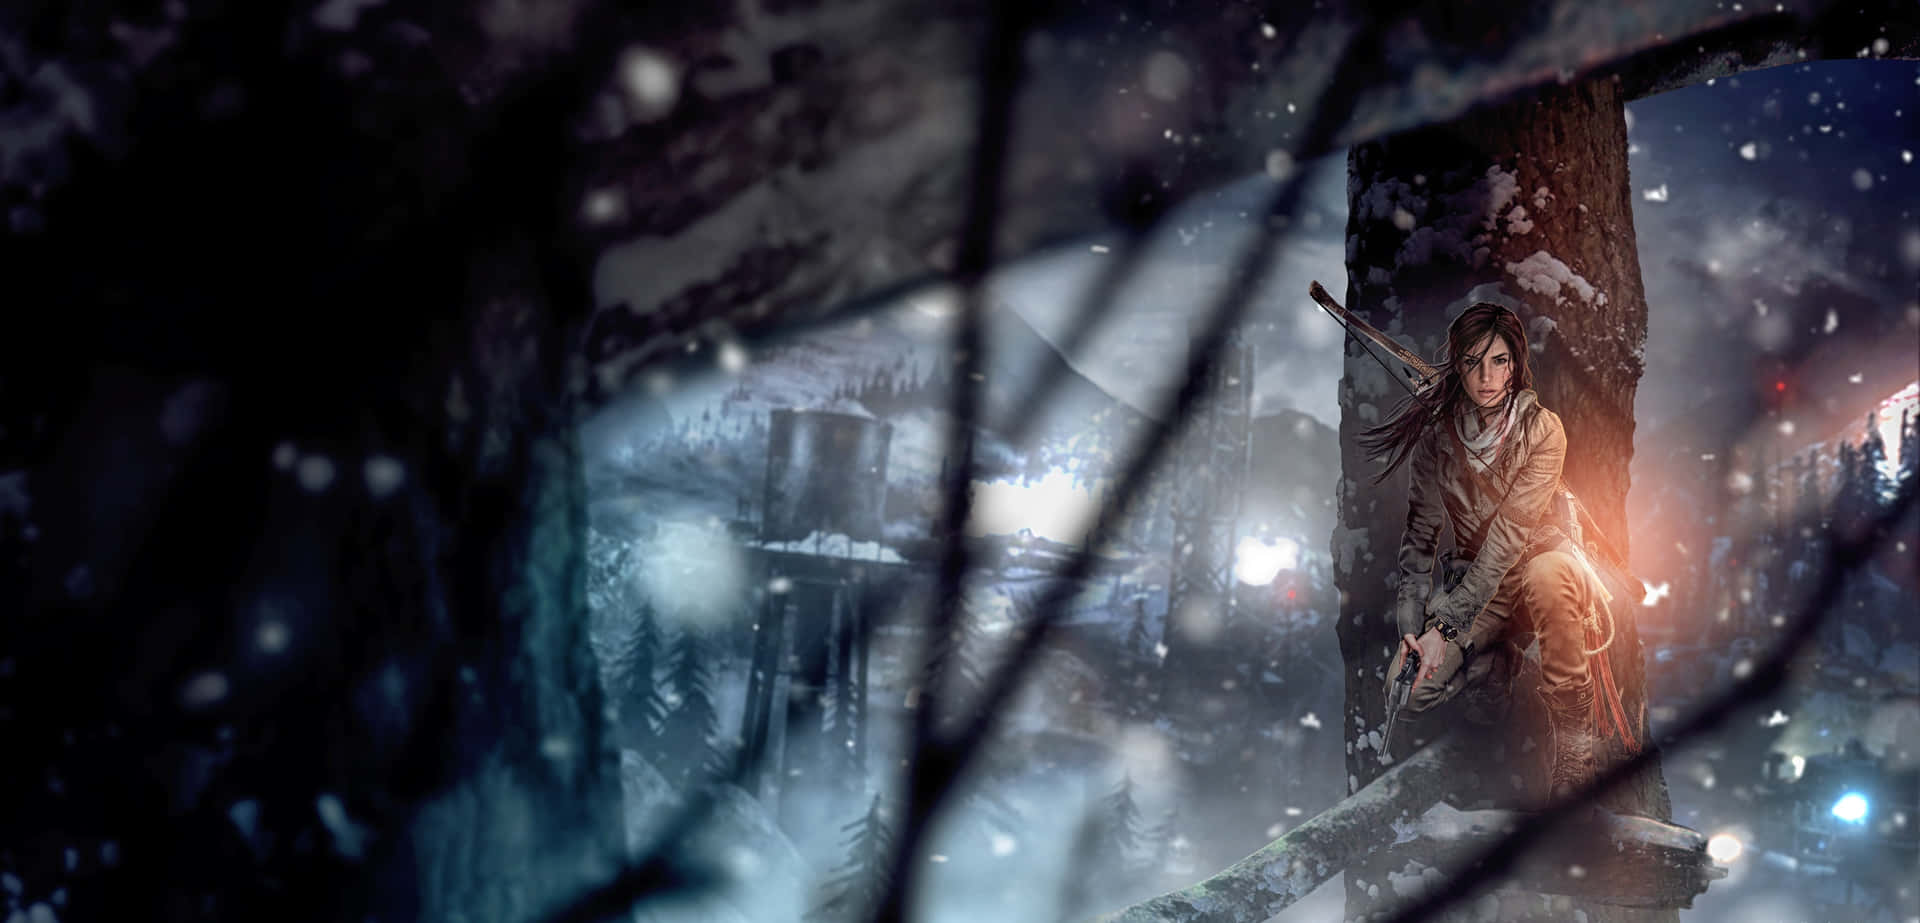 Lara Croft Exploring Ancient Catacombs In Rise Of The Tomb Raider.